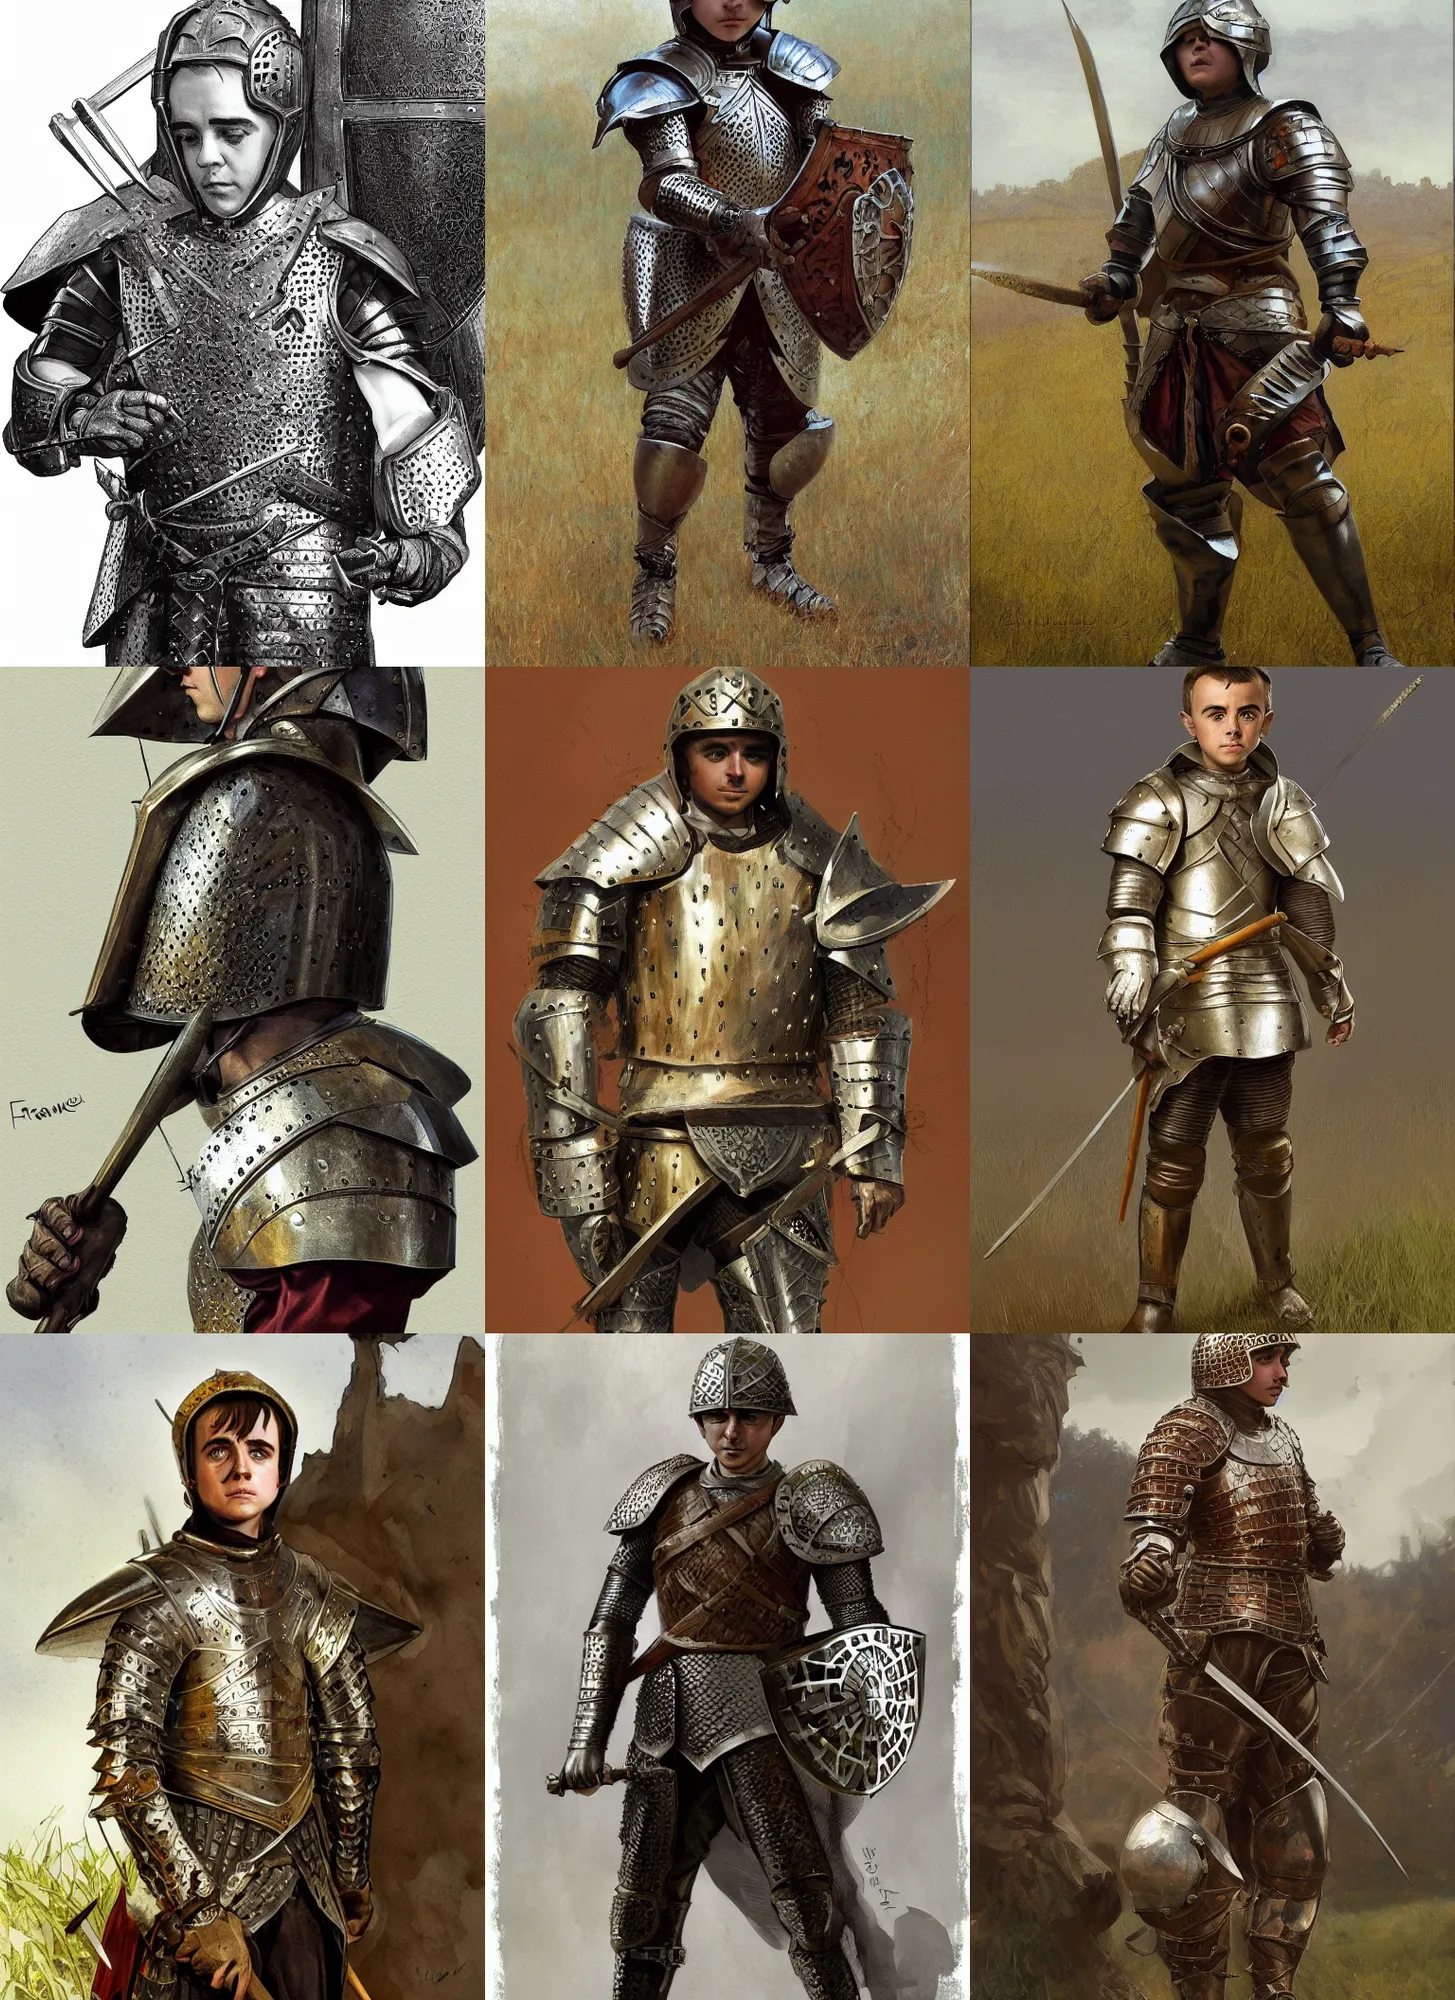 Prompt: frankie muniz young with medieval armour, field, intricate, elegant, highly detailed, artstation, sharp focus, illustration, rutkowski, mucha